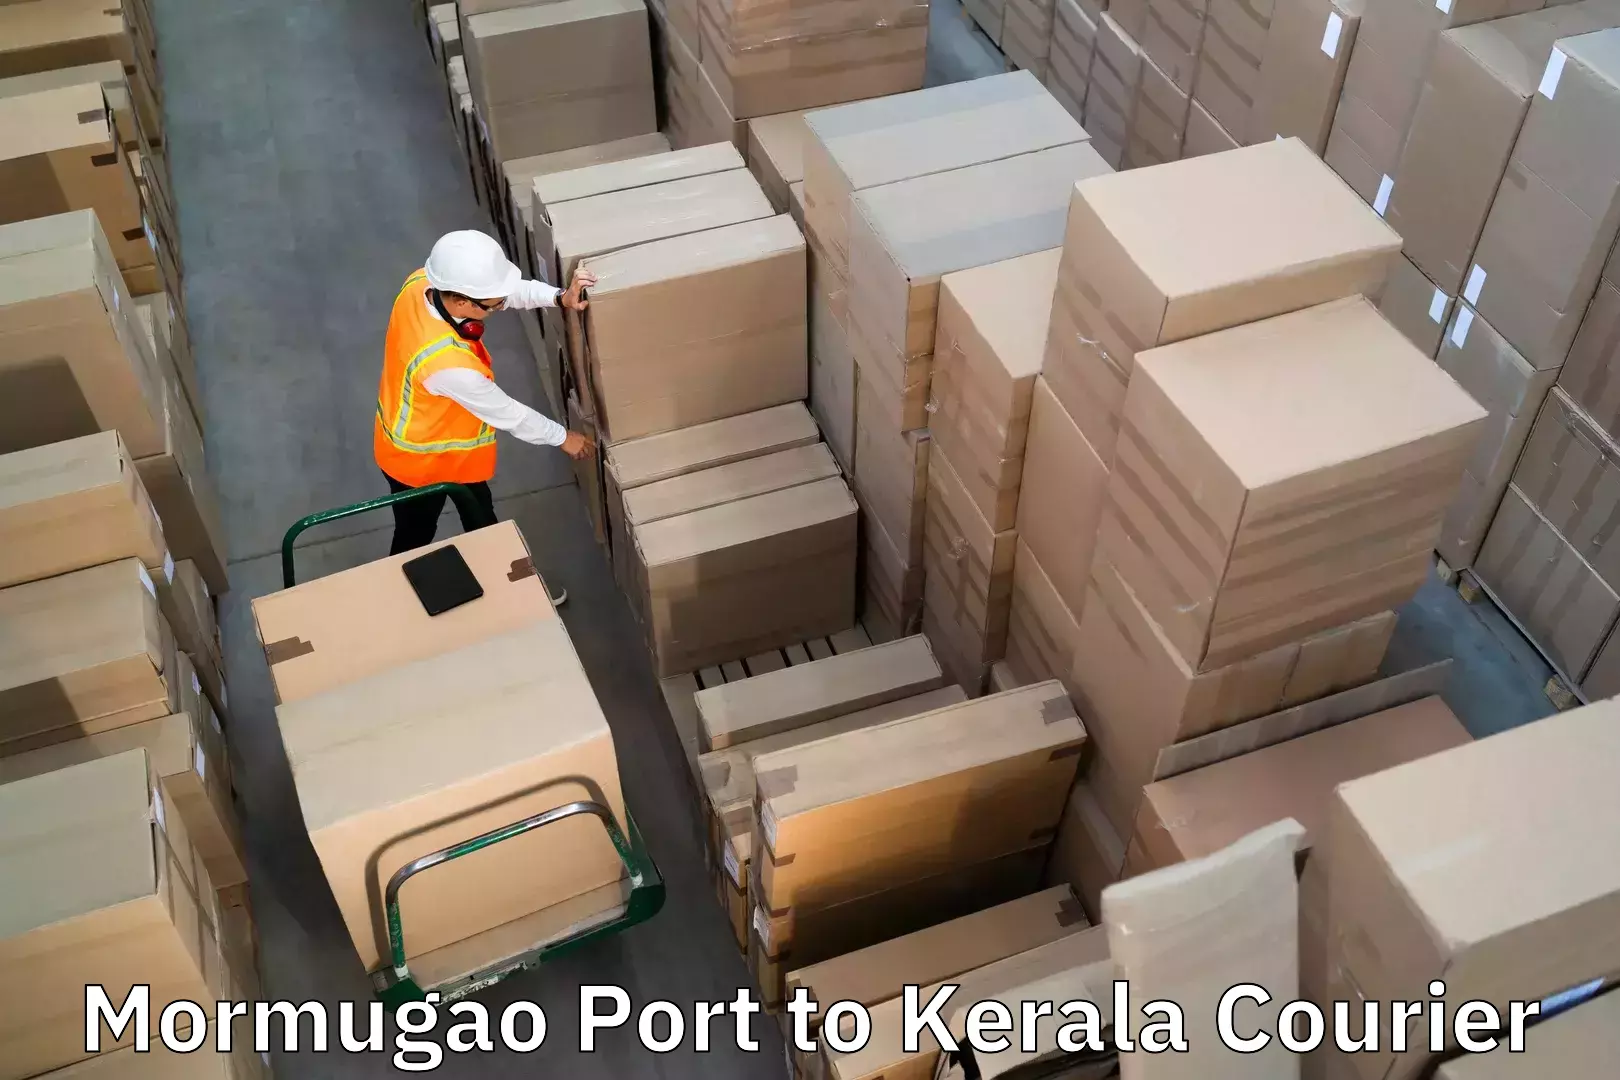 Luggage delivery network Mormugao Port to Parippally